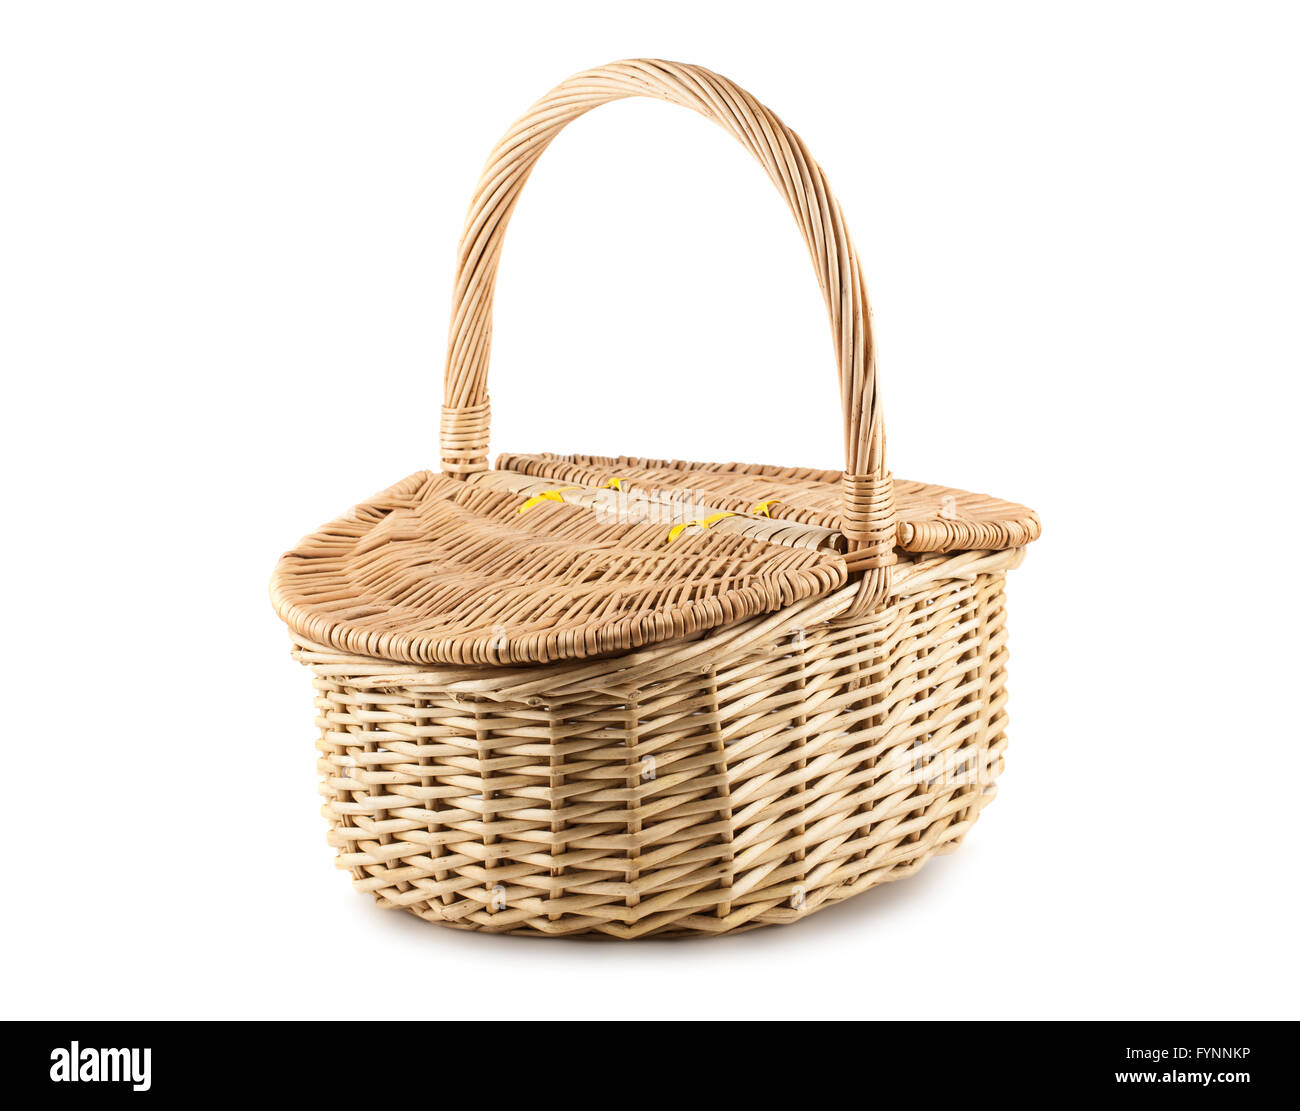 Picnic wicker basket Stock Photo